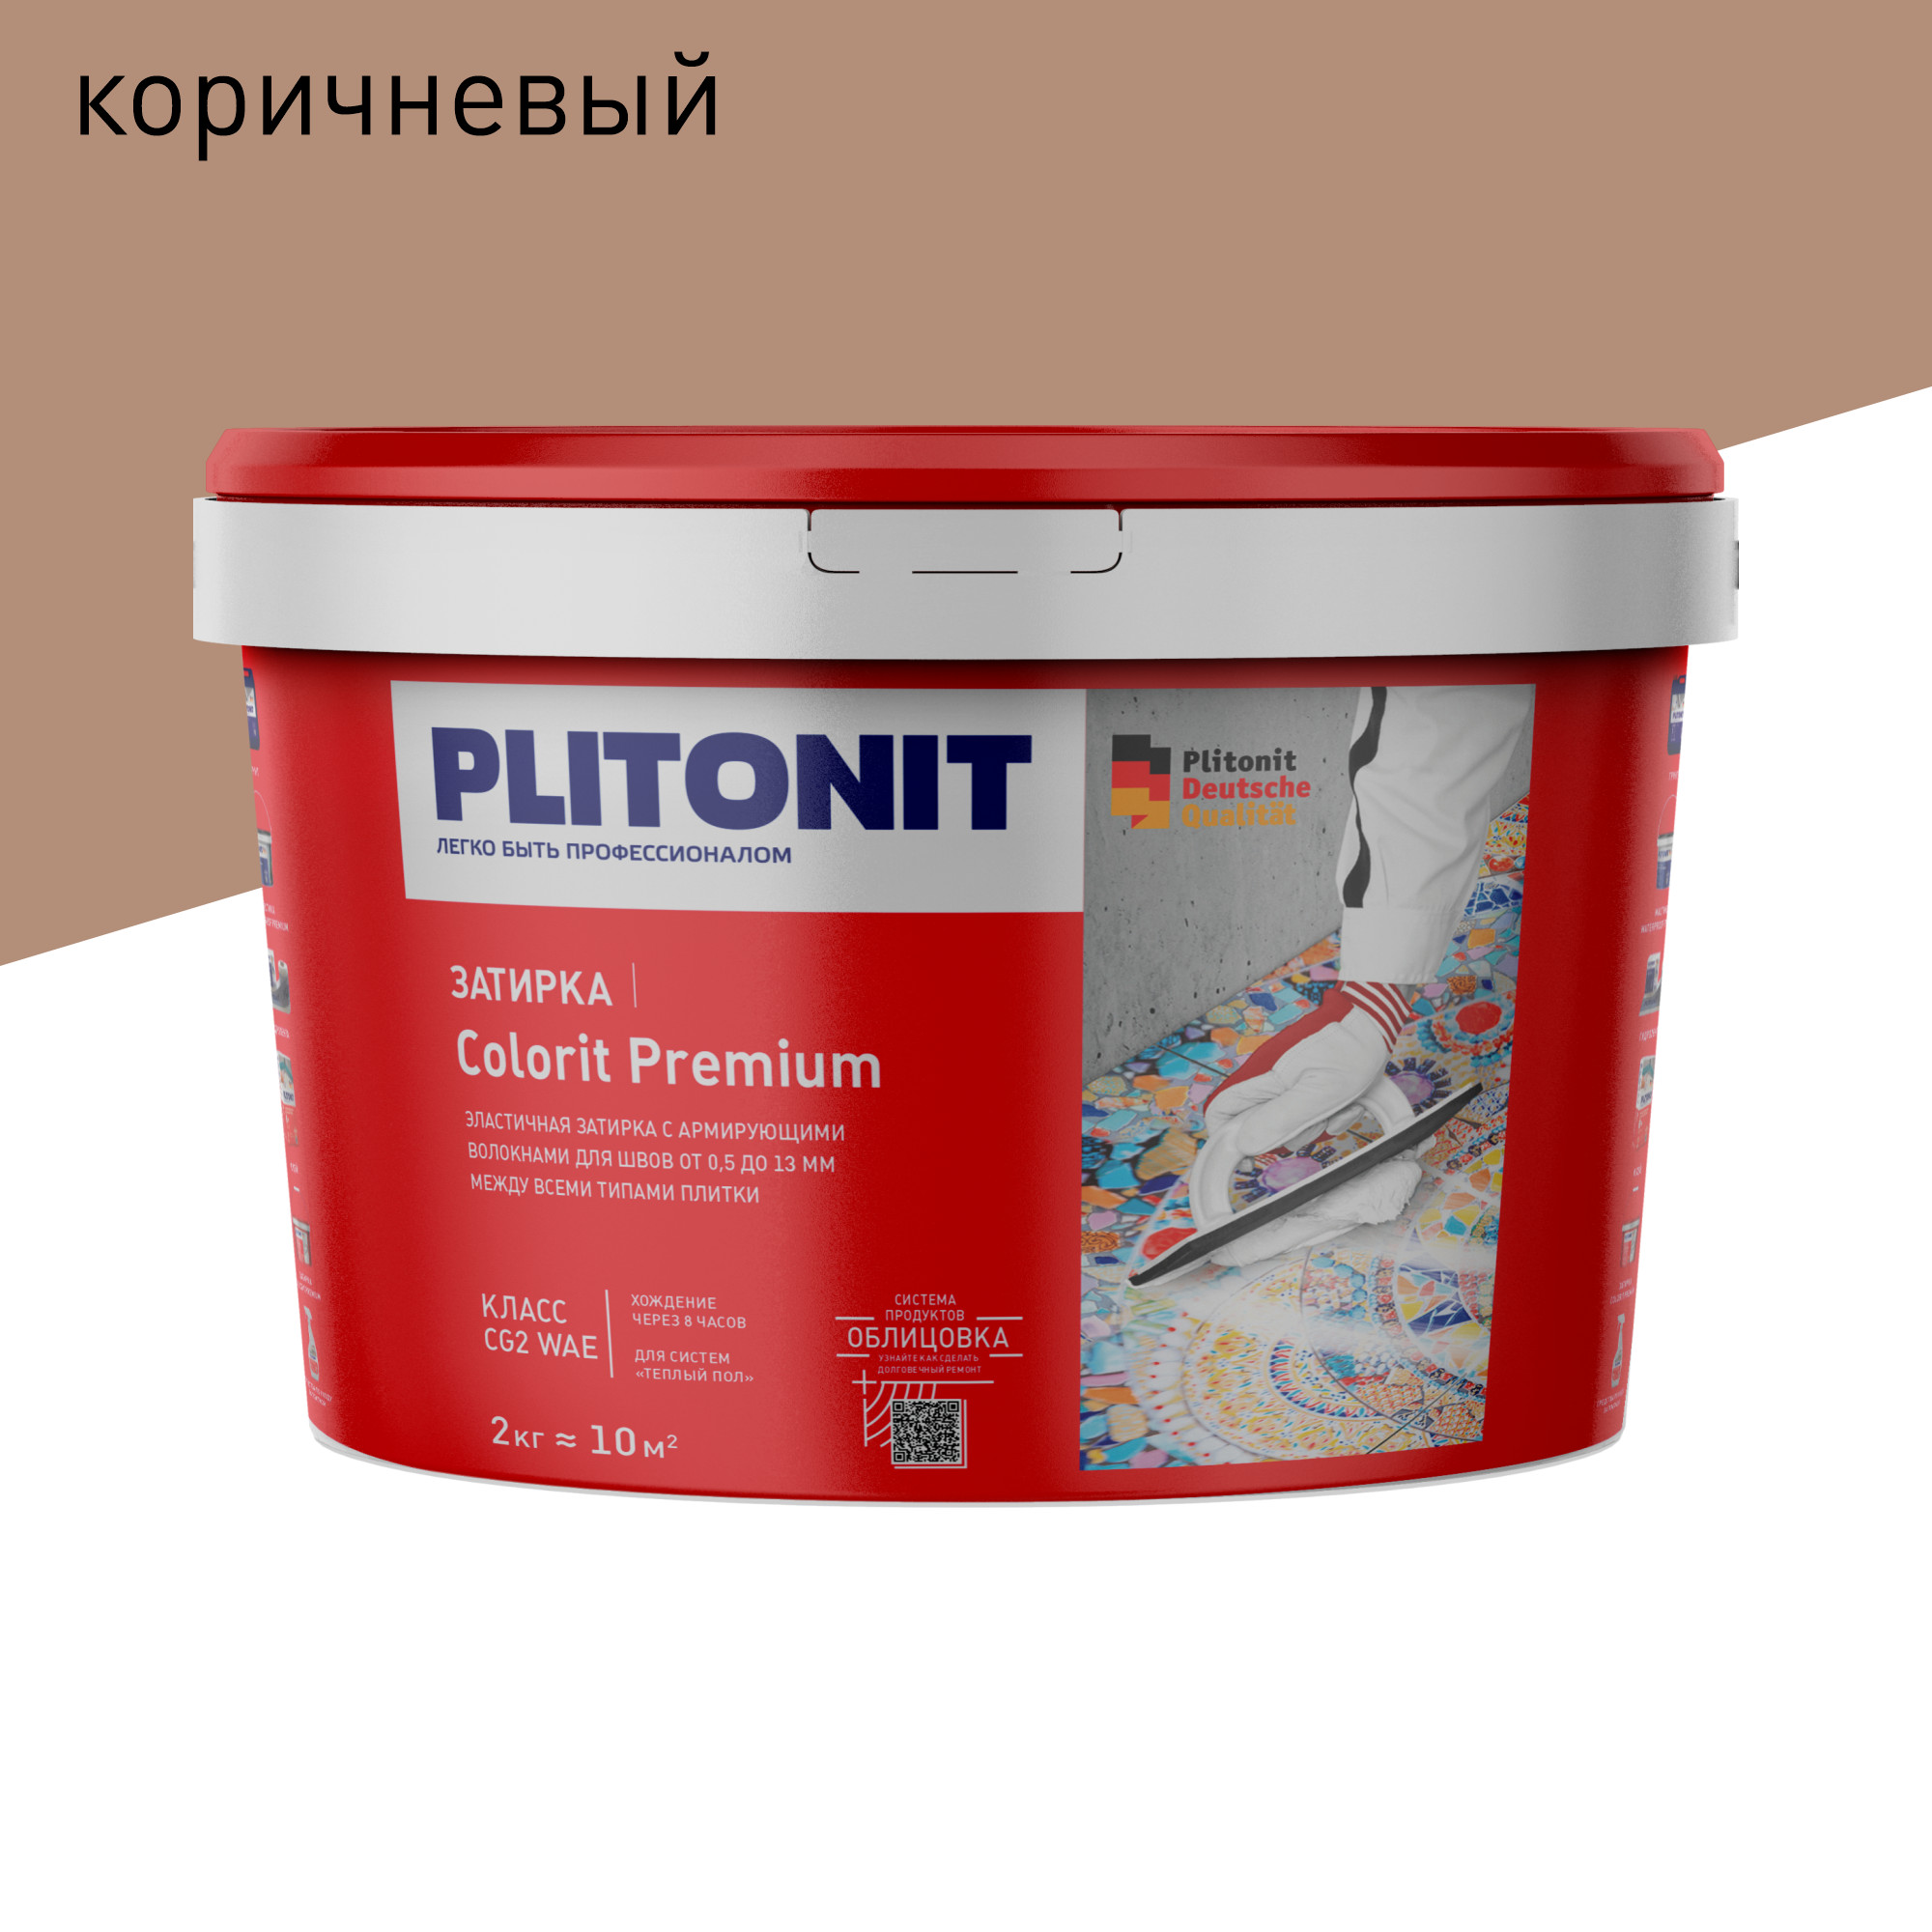 Затирка PLITONIT Colorit Premium коричневая 2 кг затирка эпоксидная plitonit colorit fast premium песочно серый 2 кг